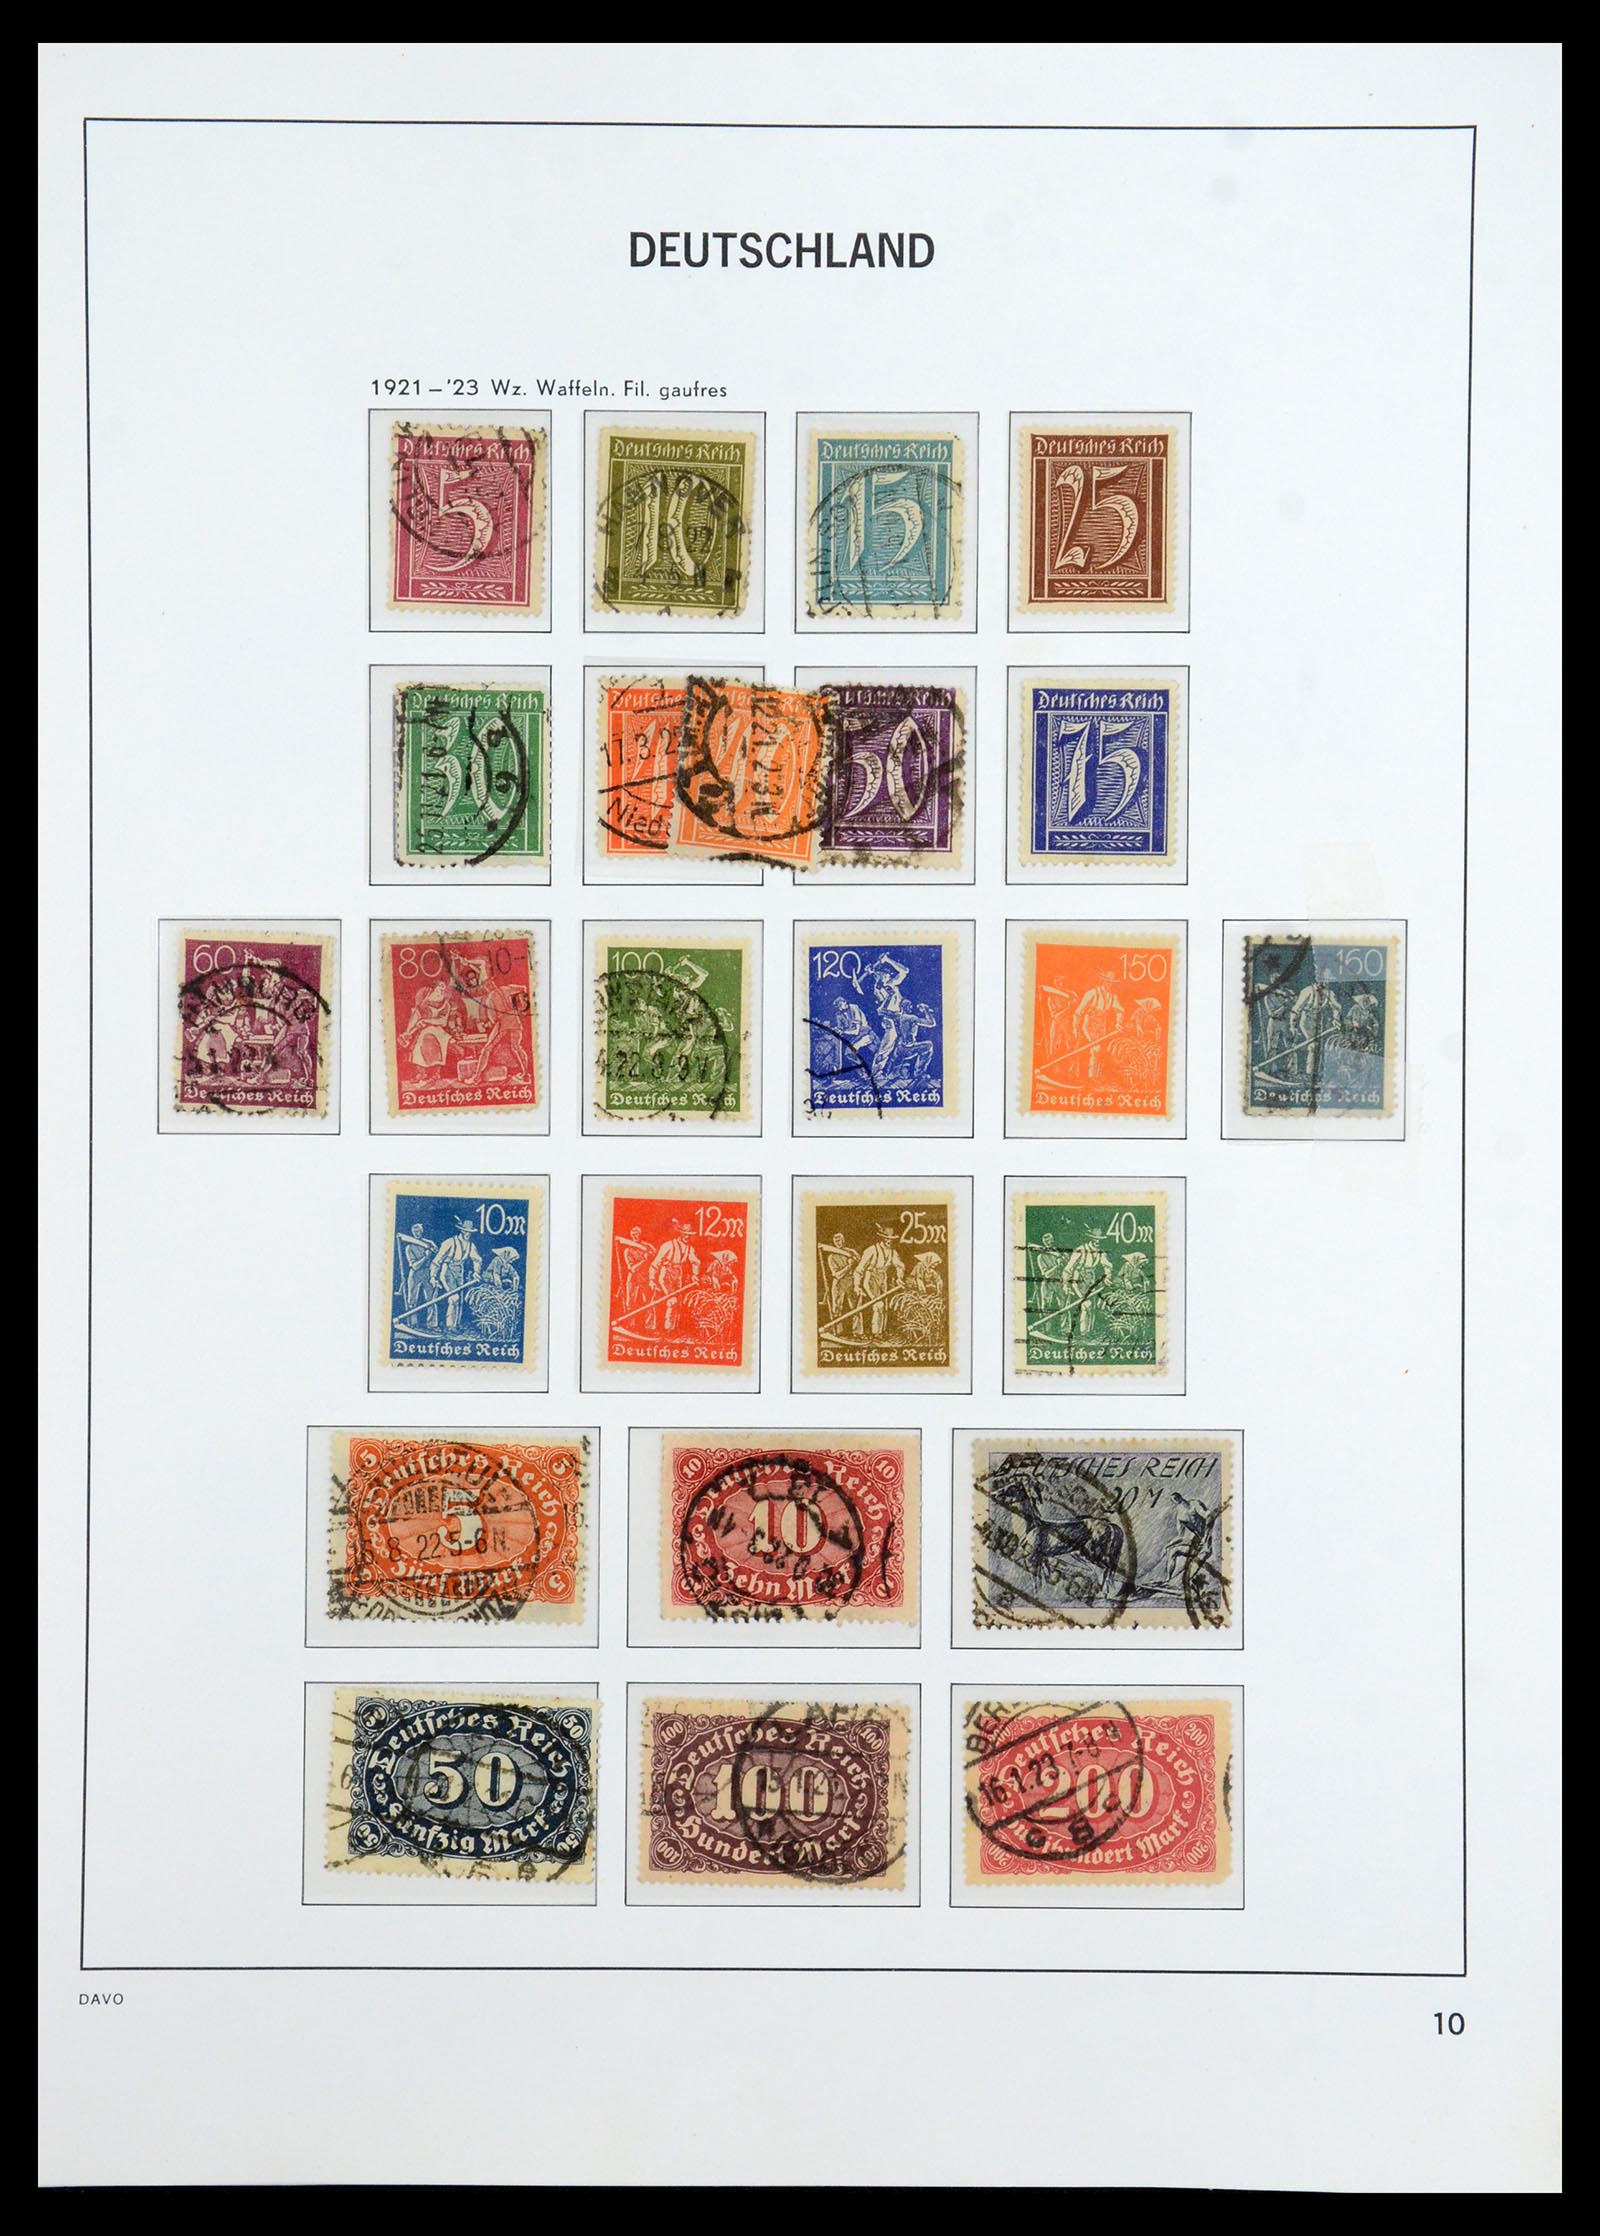 36399 011 - Stamp collection 36399 German Reich 1872-1945.